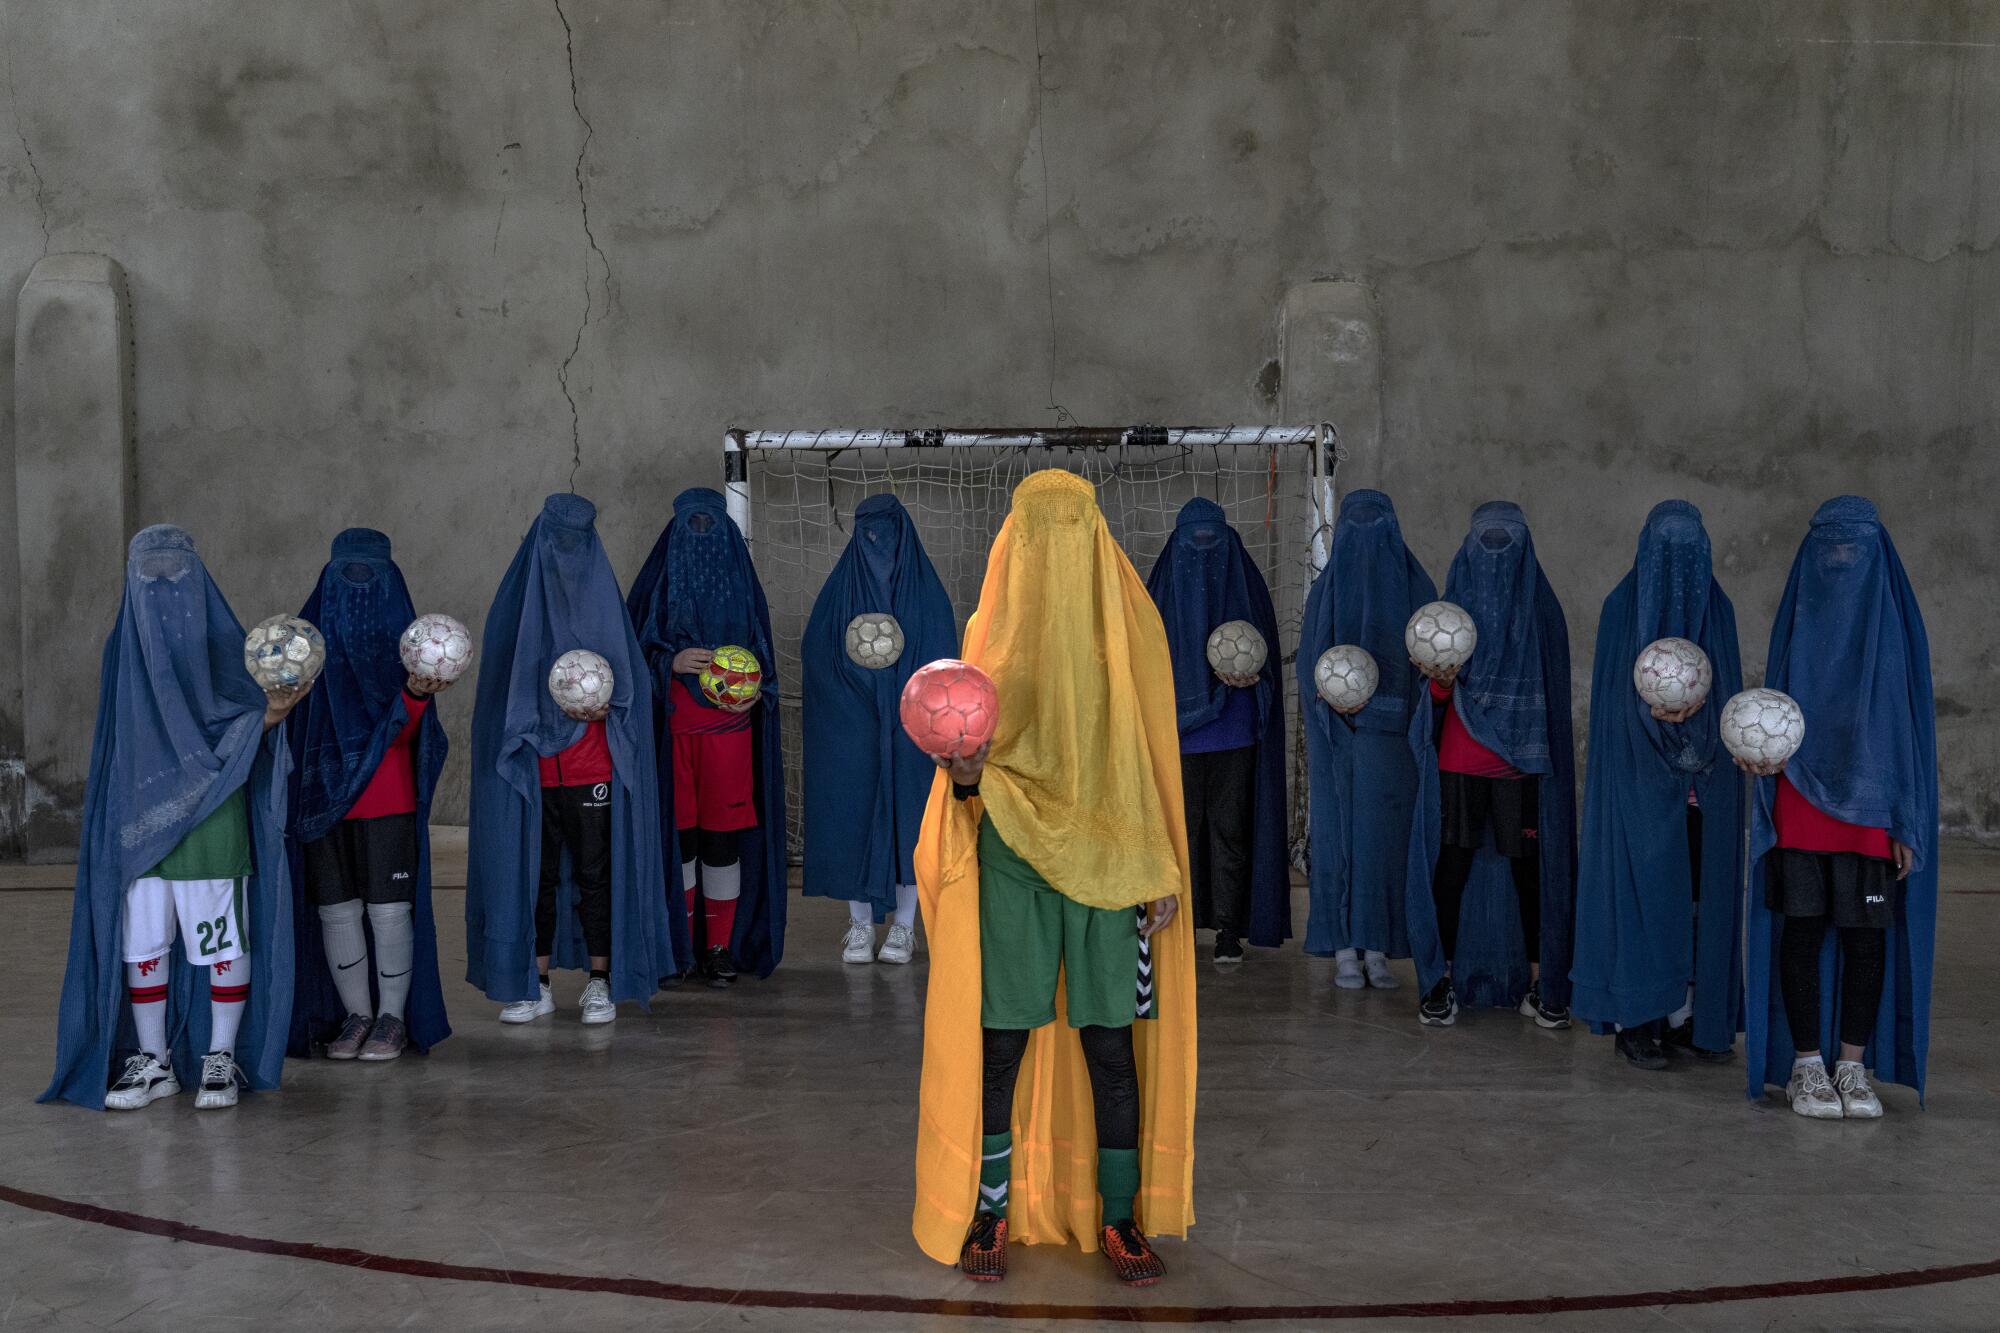 An Afghan women's soccer team poses in burqas.